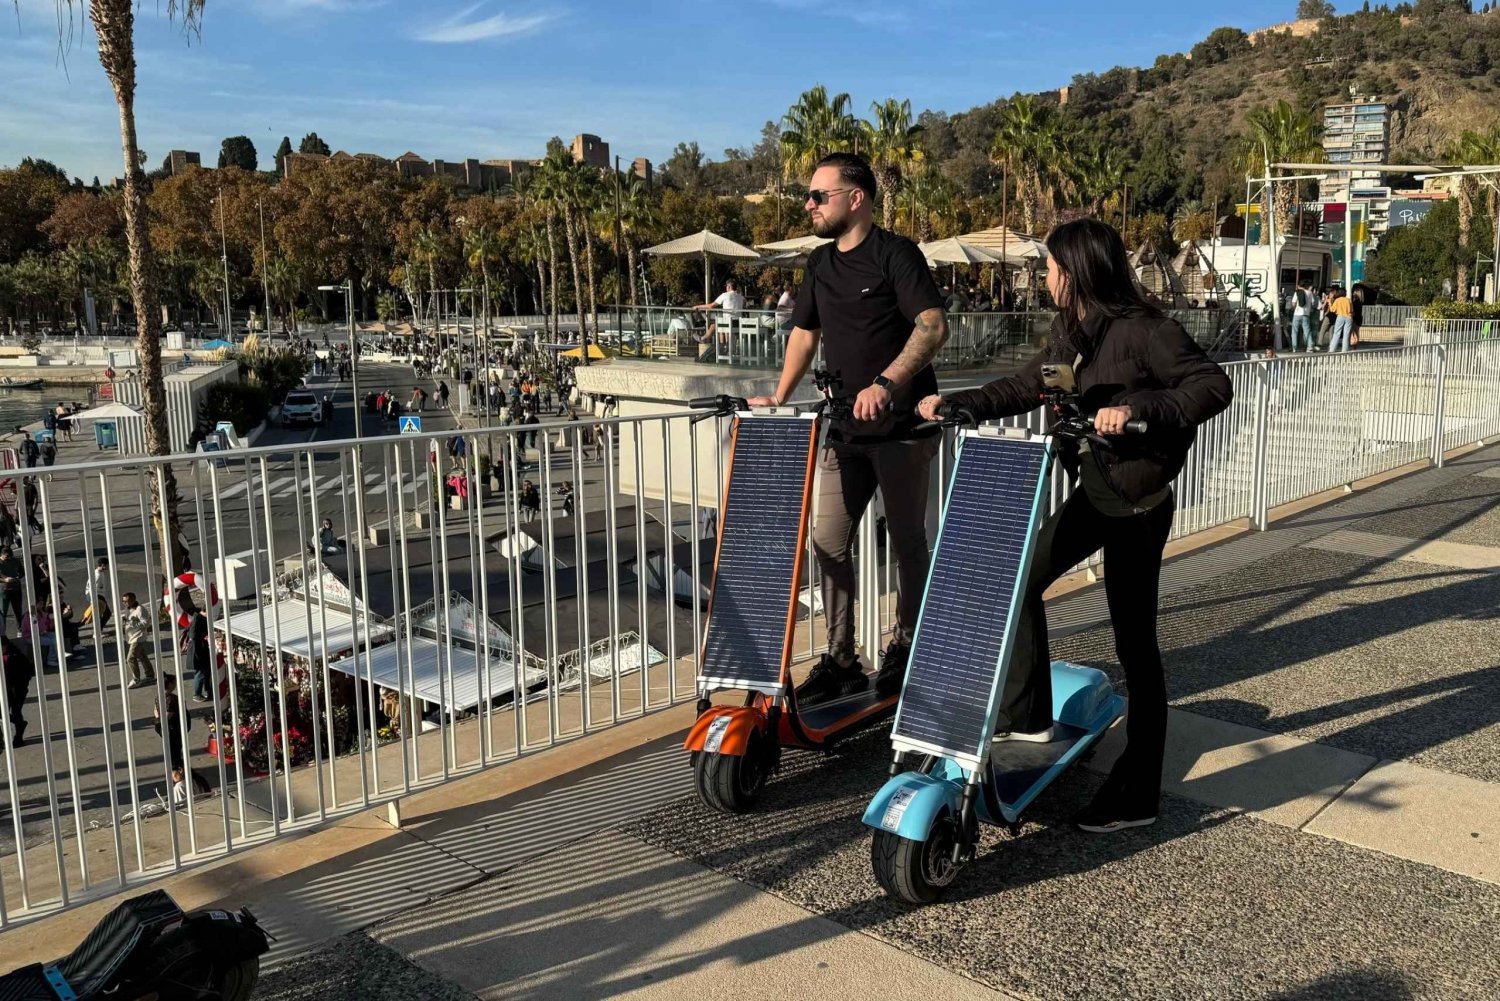 Málaga: Explore Málaga em uma scooter solar